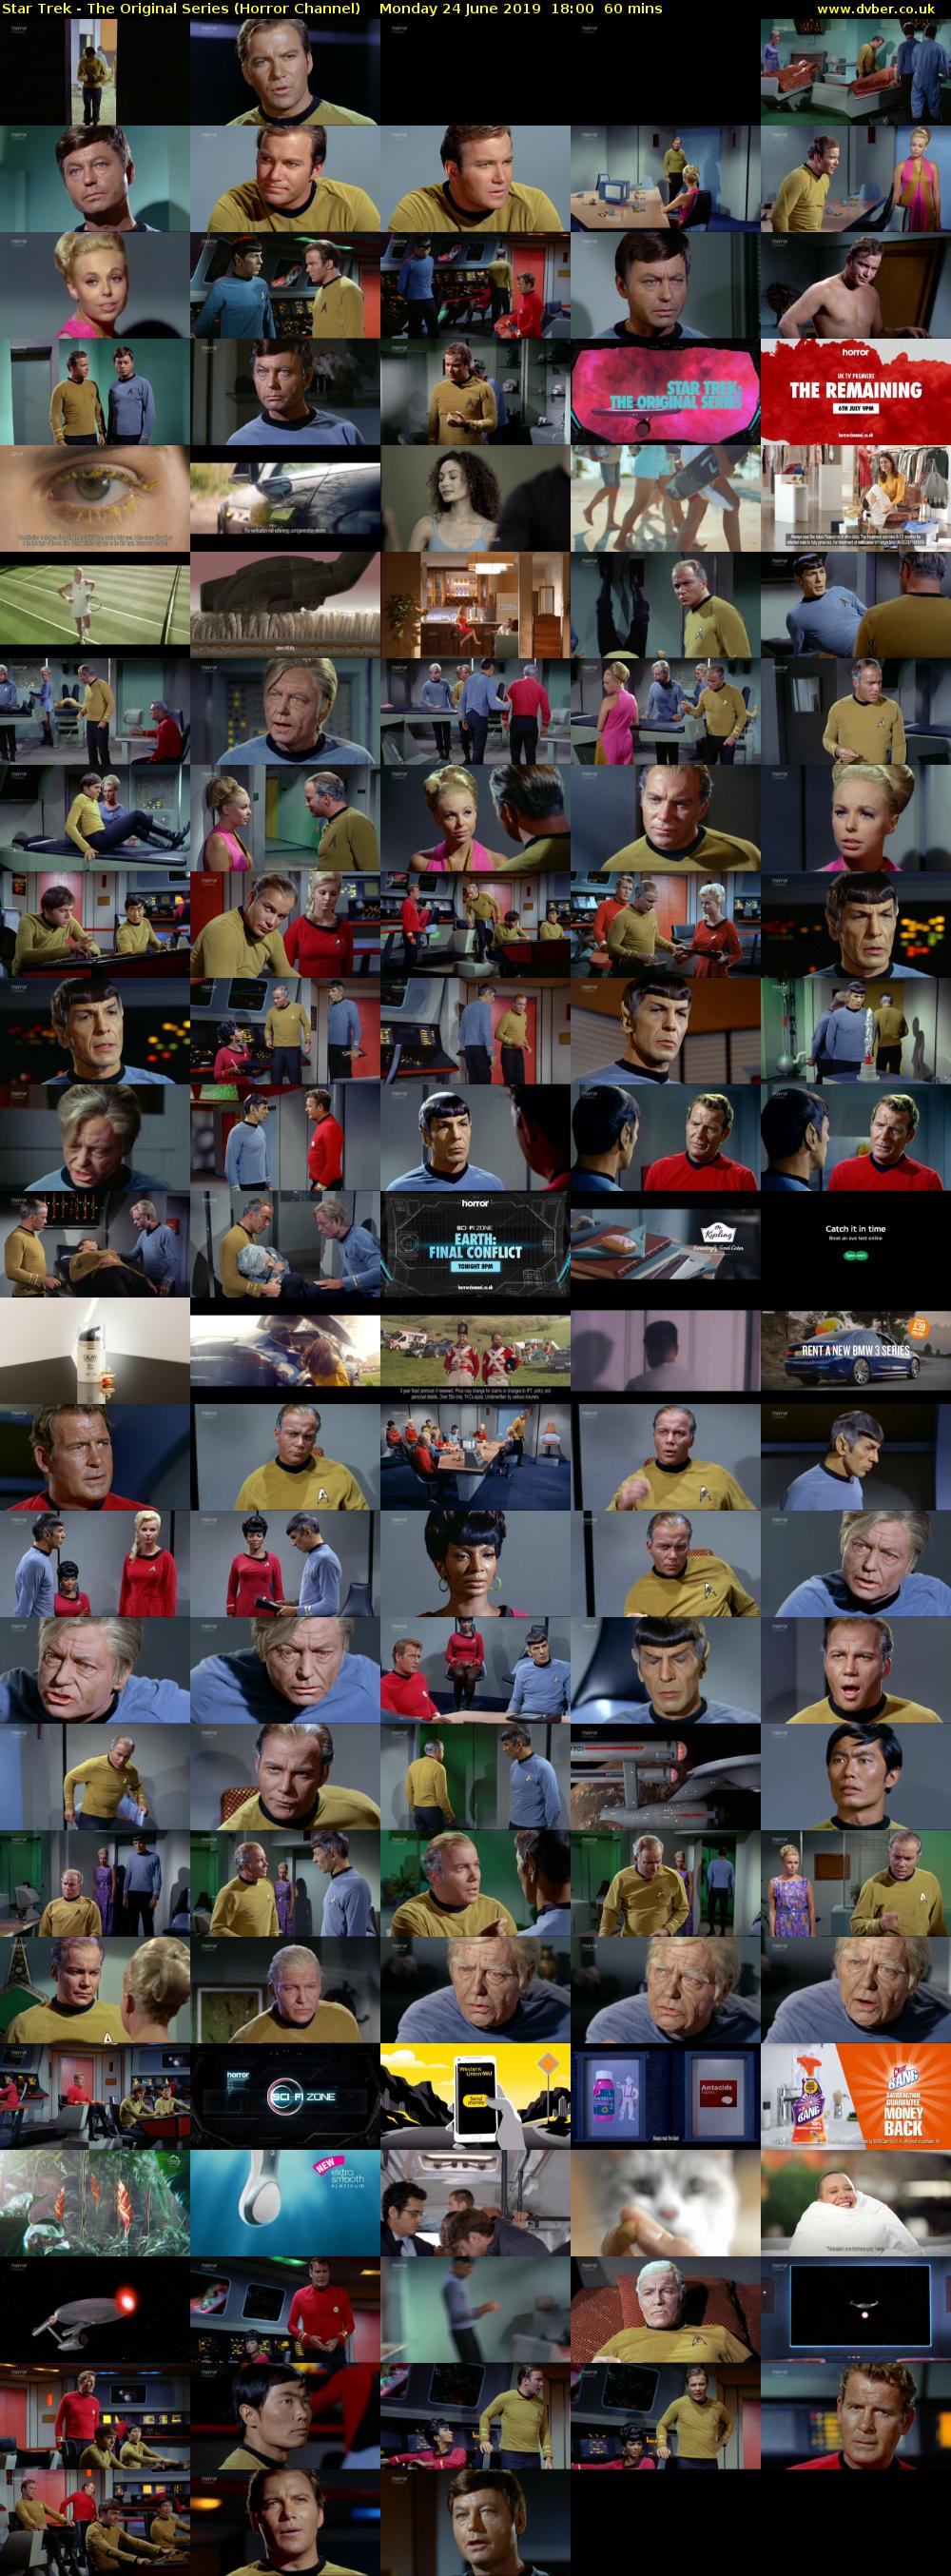 Star Trek - The Original Series (Horror Channel) Monday 24 June 2019 18:00 - 19:00